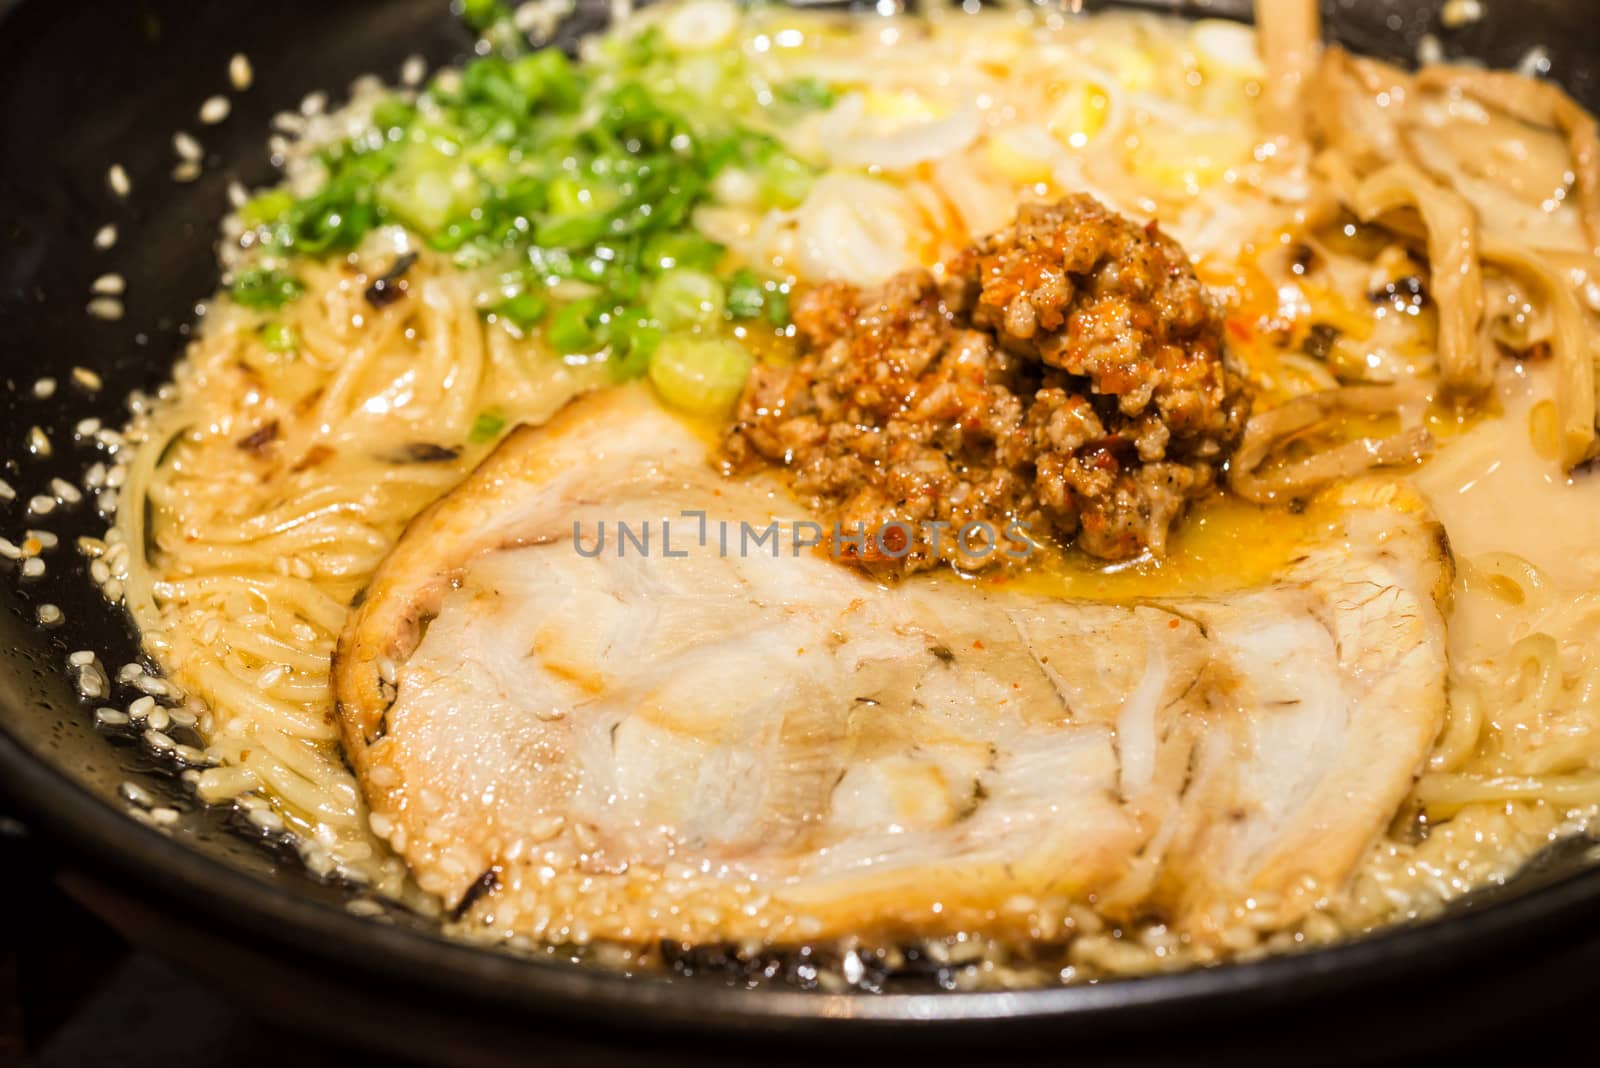 ramen noodle japanese food style by moggara12